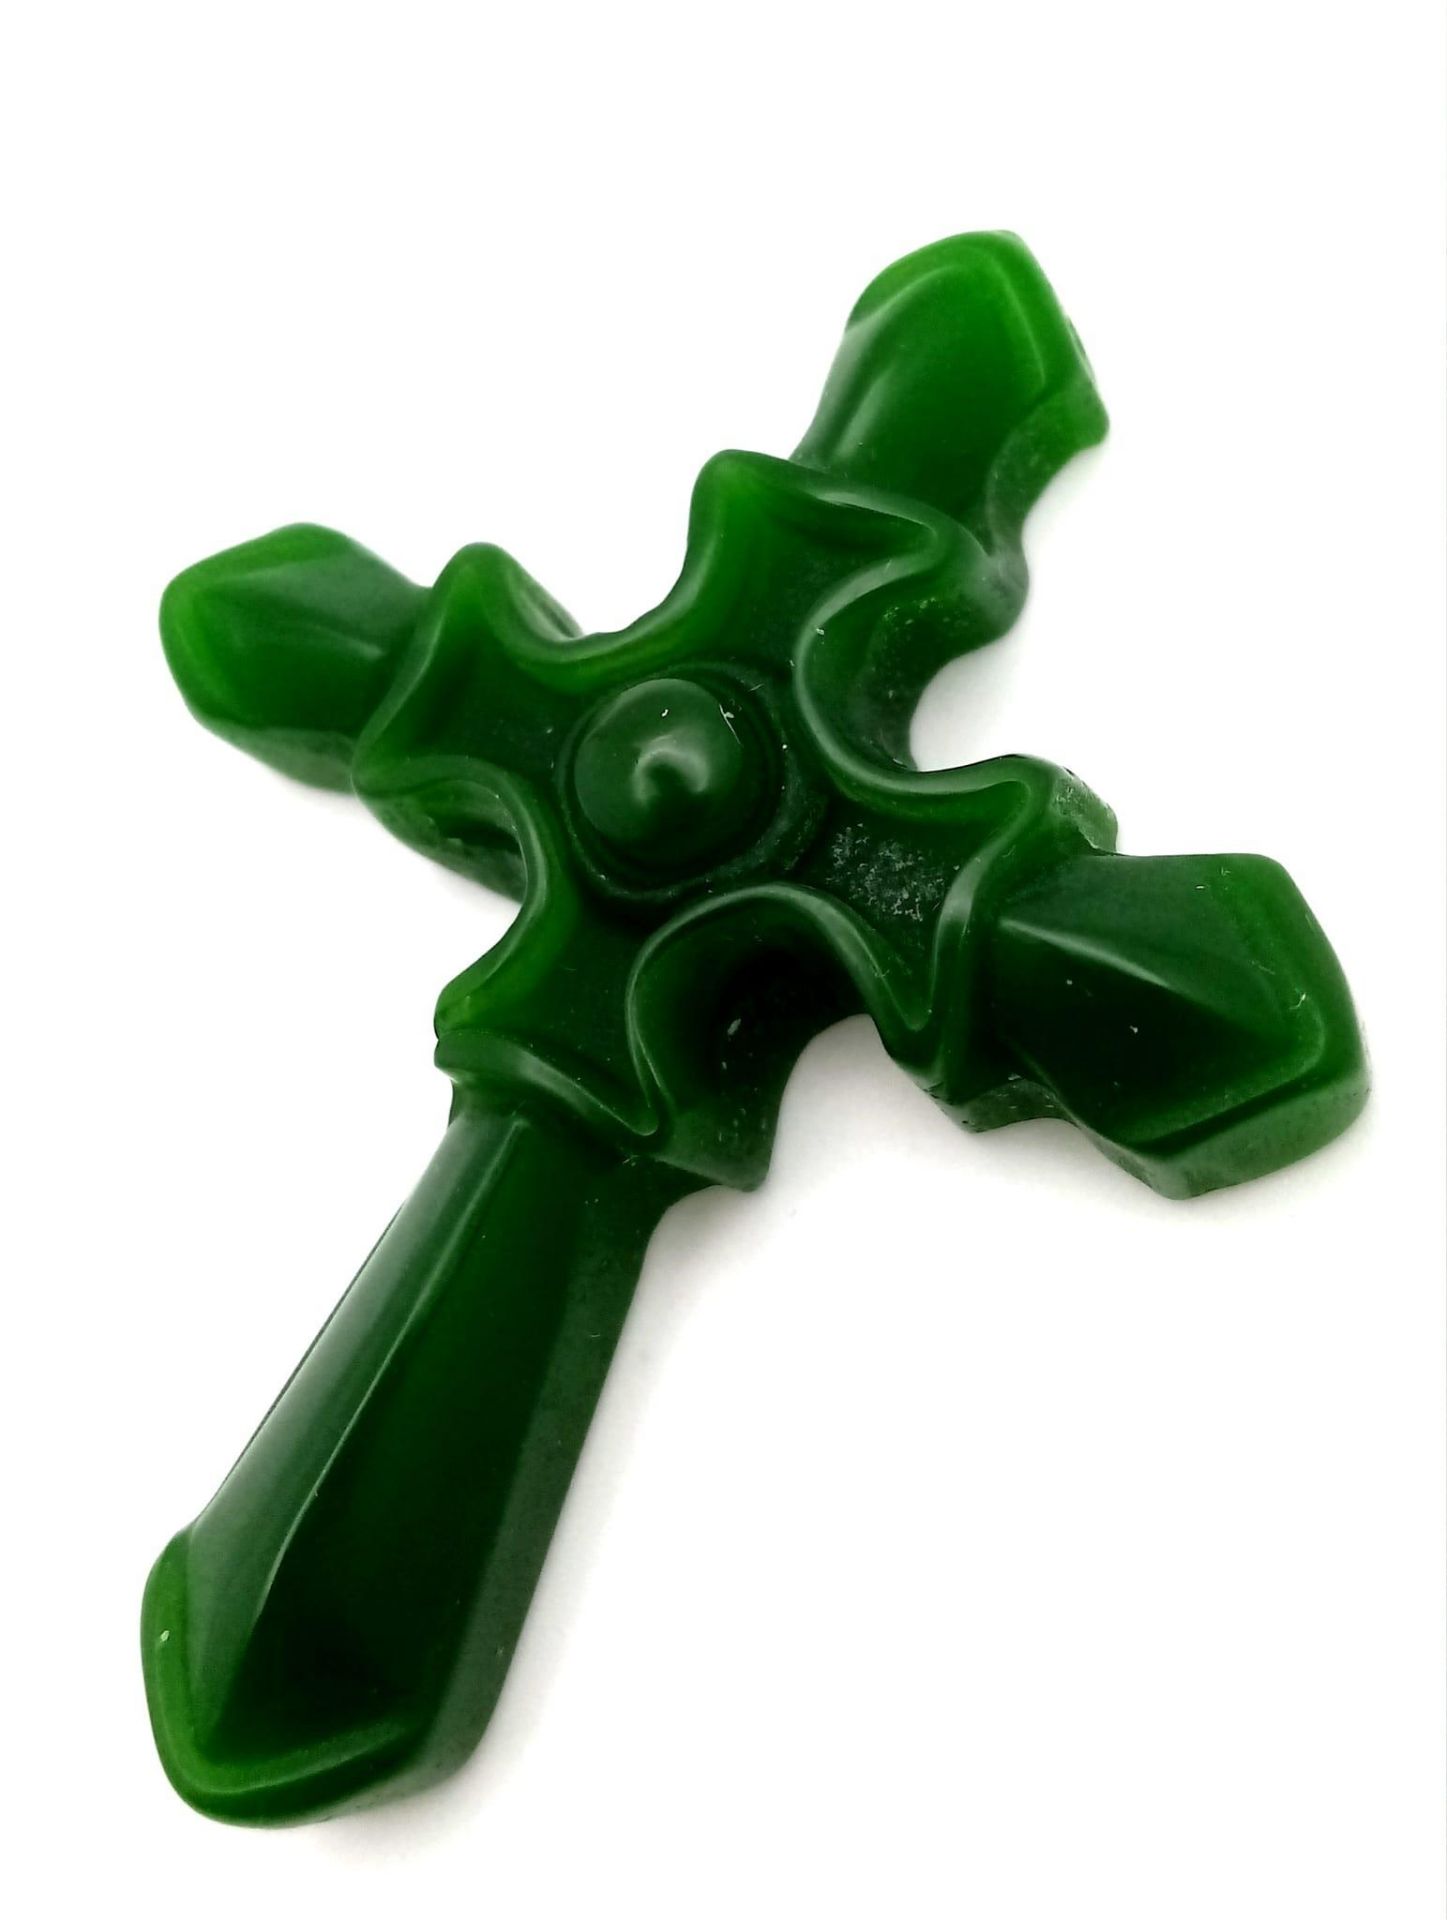 A Decorative Green Jade Cross Pendant. 5cm x 3.5cm